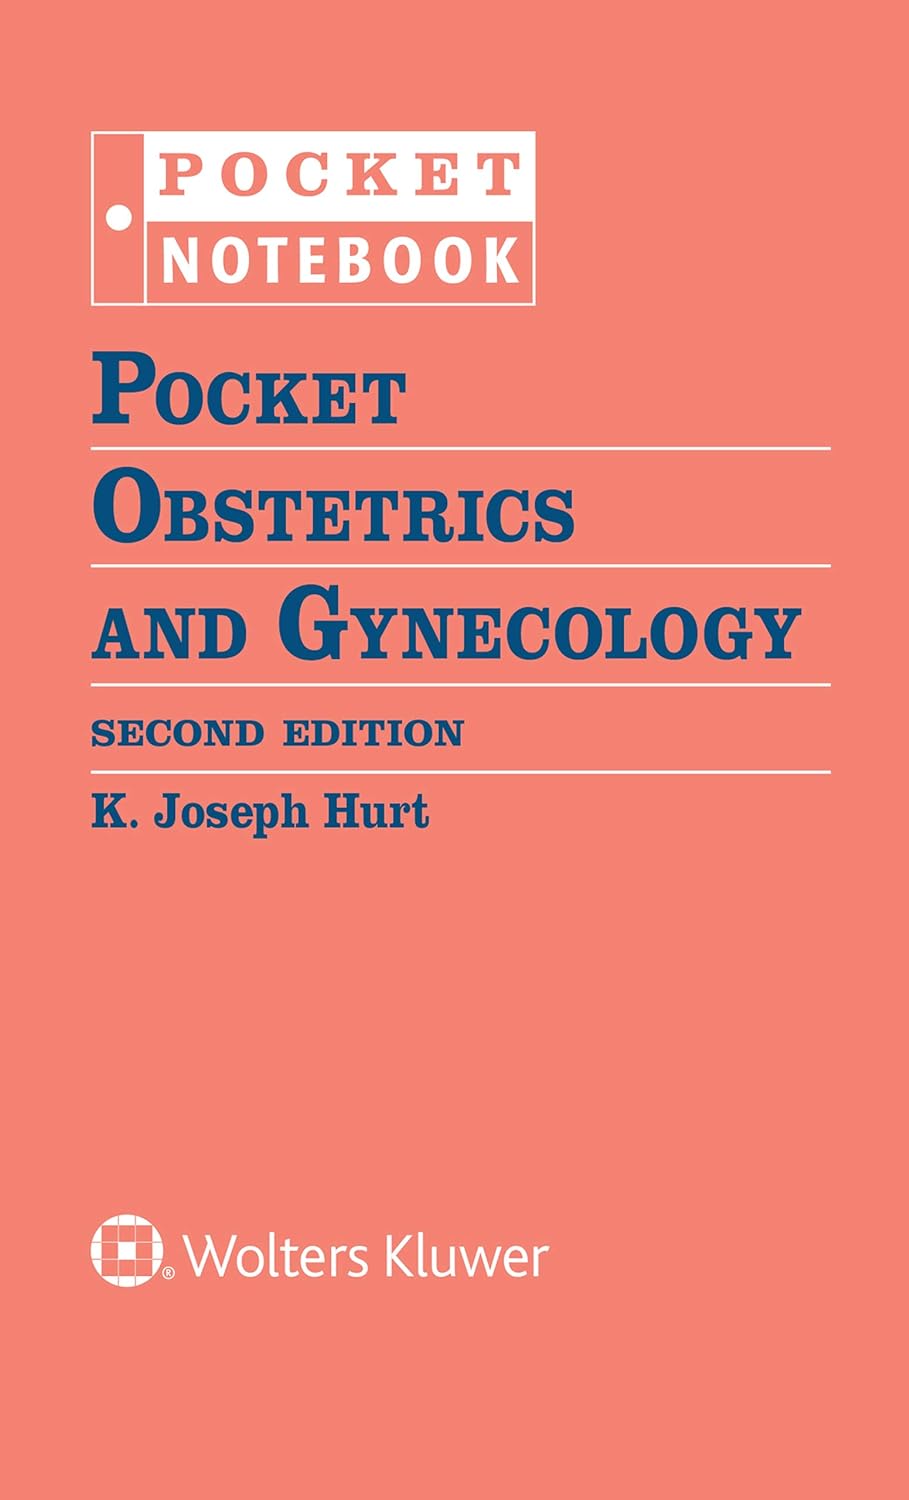 Pocket Obstetrics and Gynecology, 2ed (Pocket Notebook) by K. Joseph Hurt